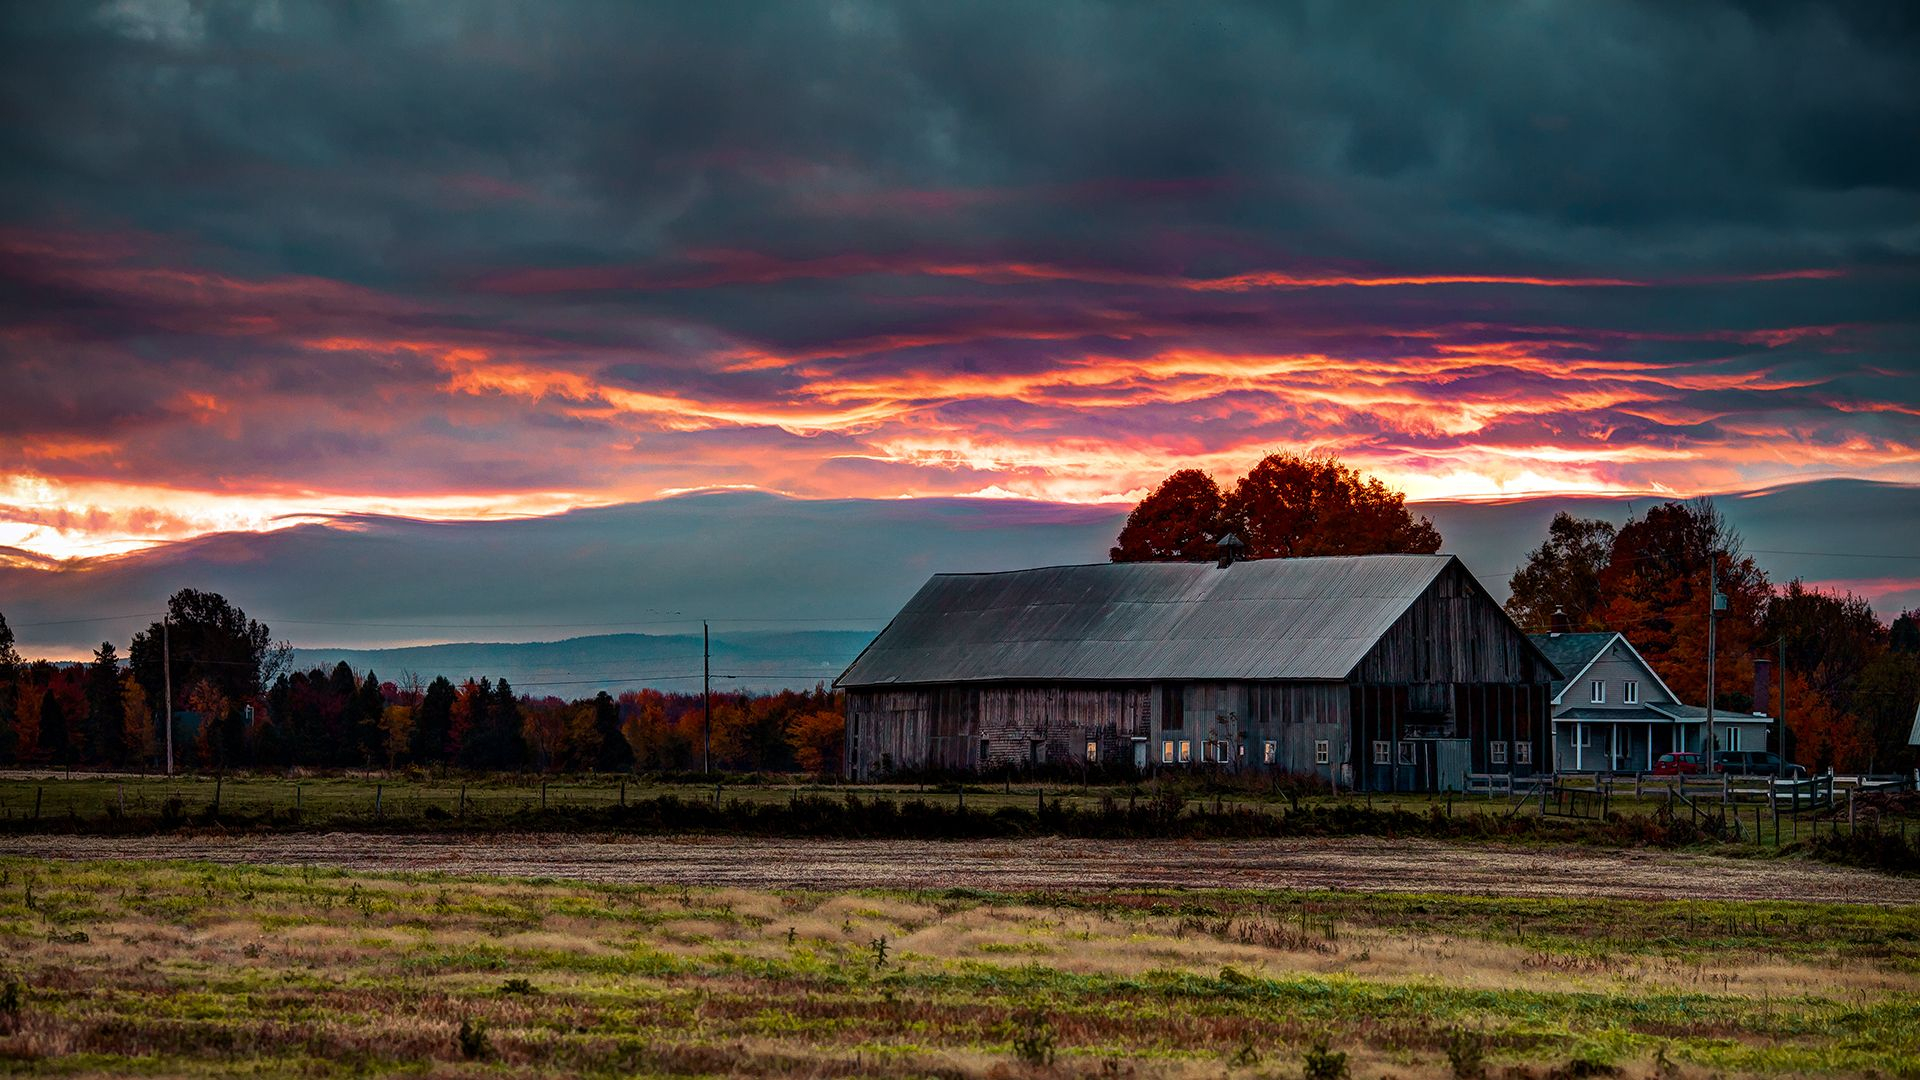 1920x1080 barn sunrise | ... barn farm rustic fields trees autumn fall sunset sunrise sky clouds | Sunrise wallpaper, Uhd wallpaper, Nature wallpaper